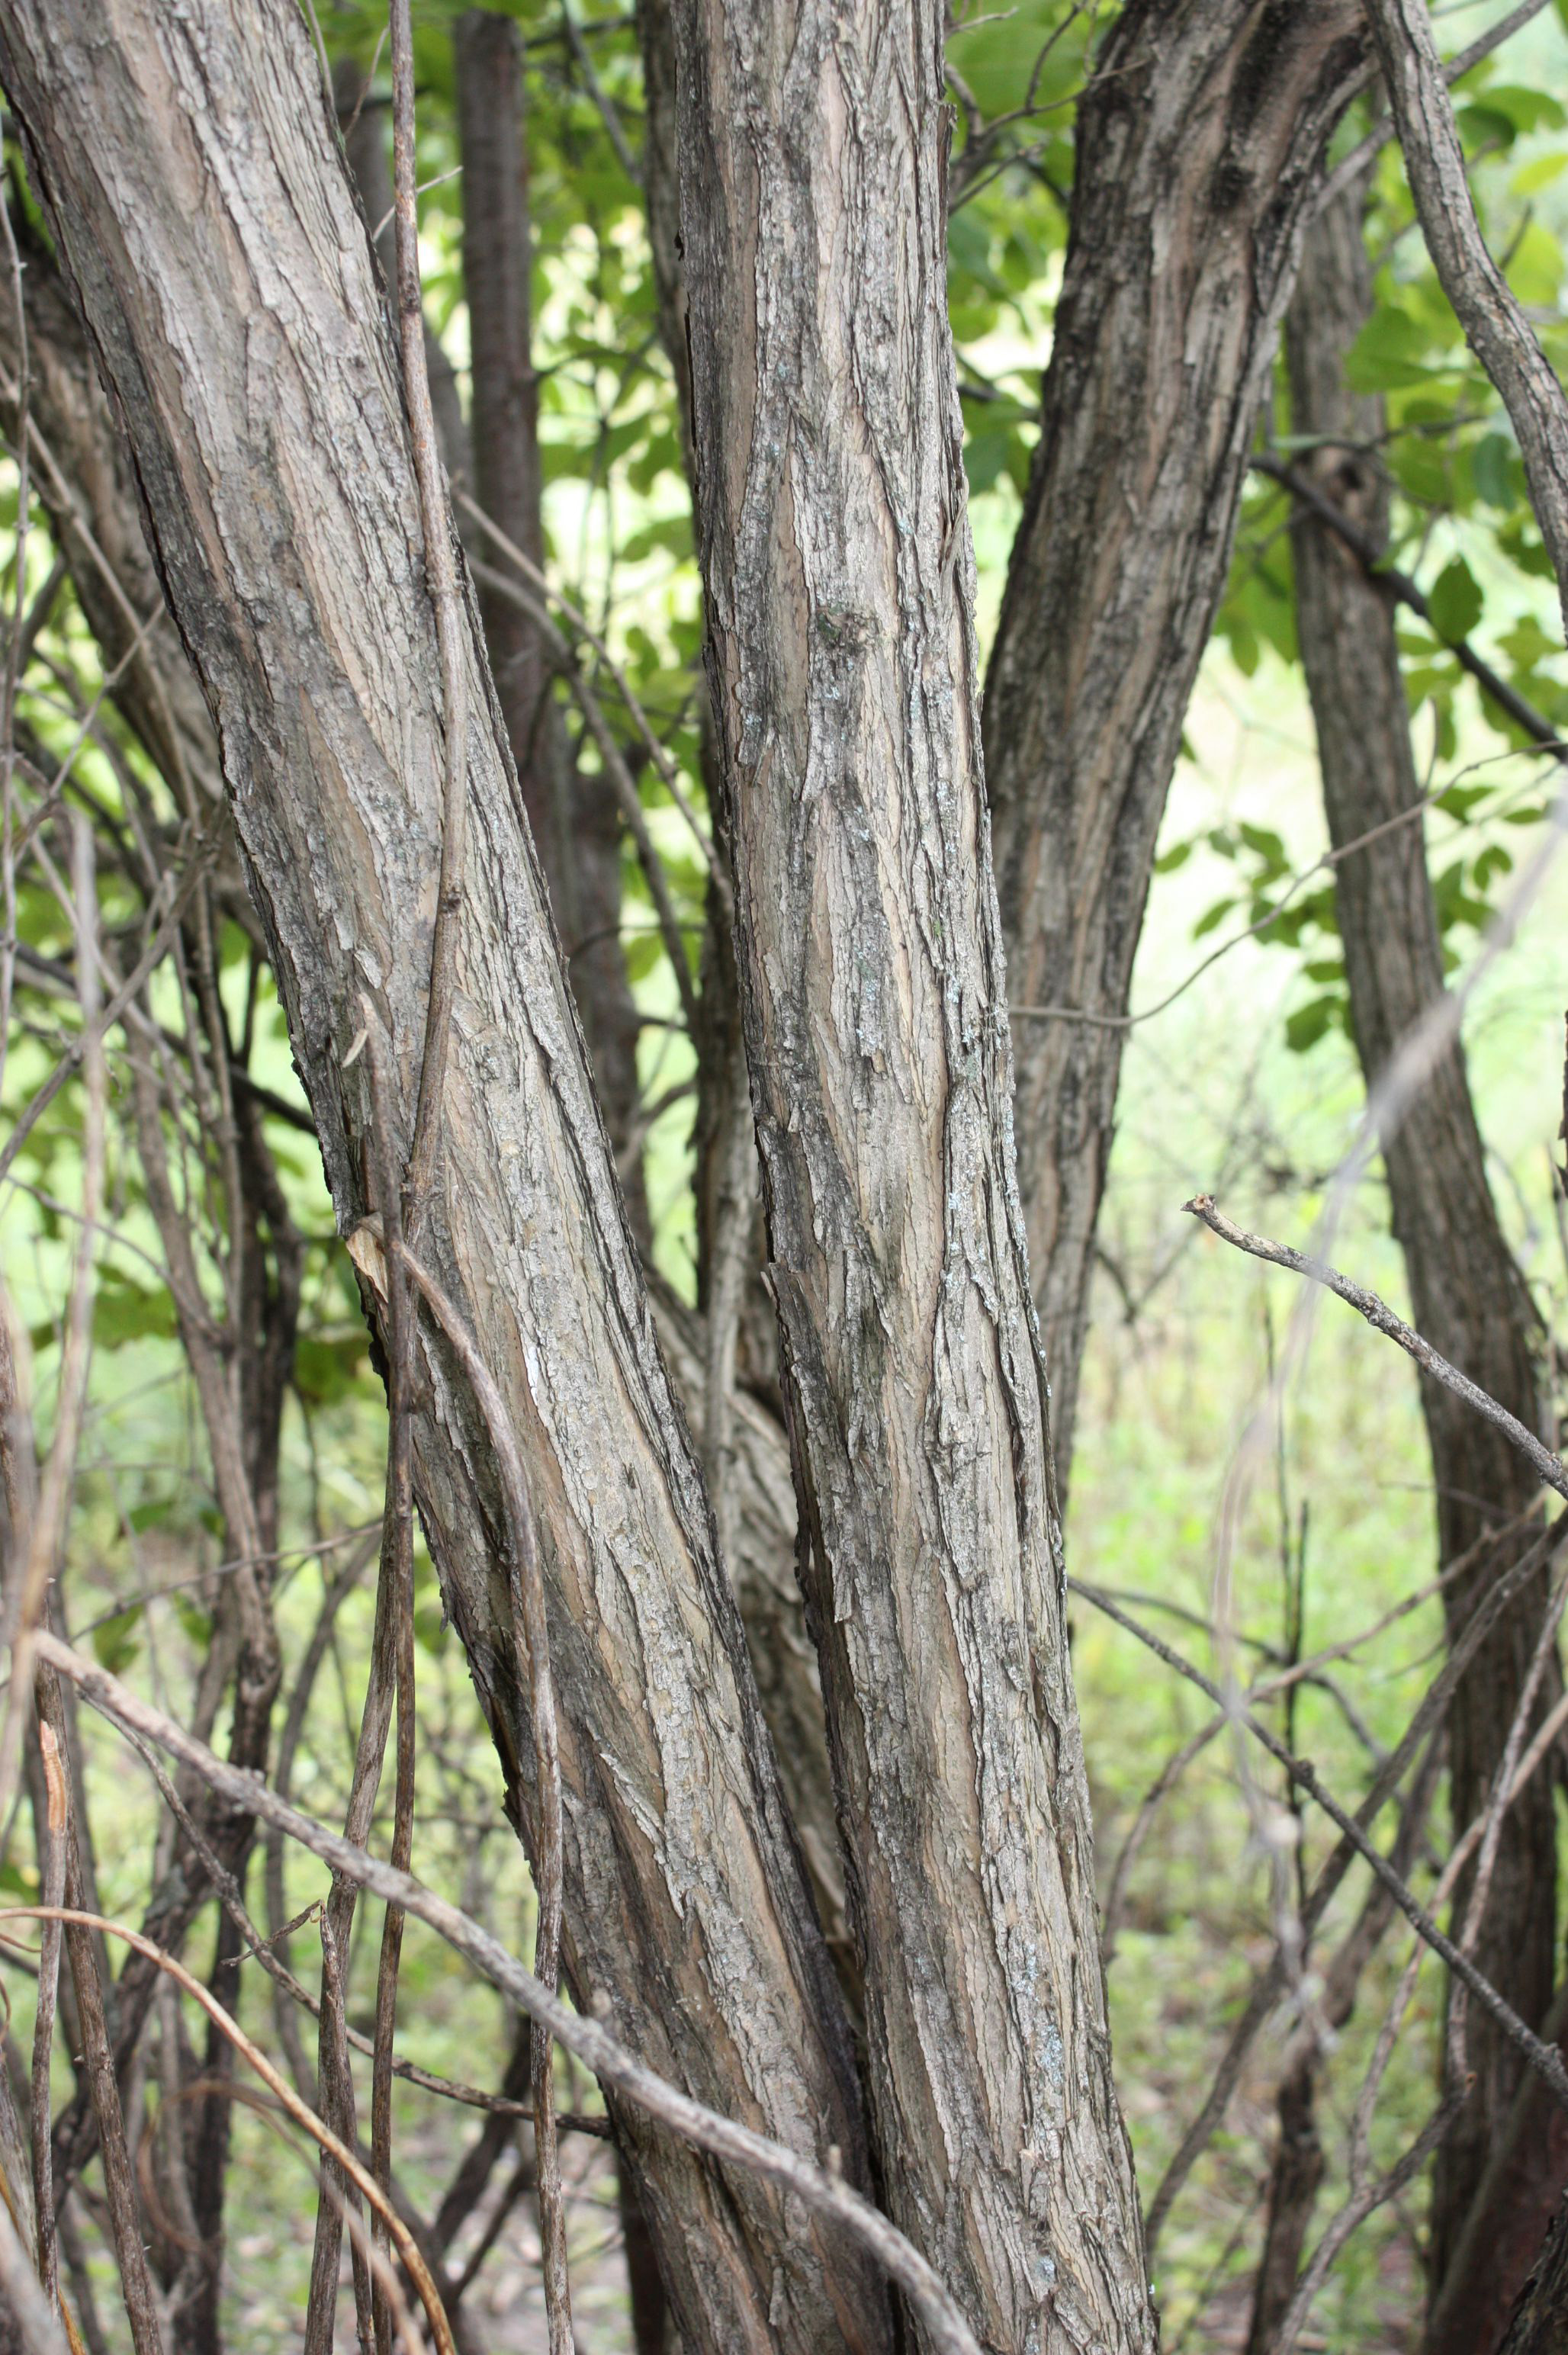 A medium-size, gray shrub trunk extending in three directions.